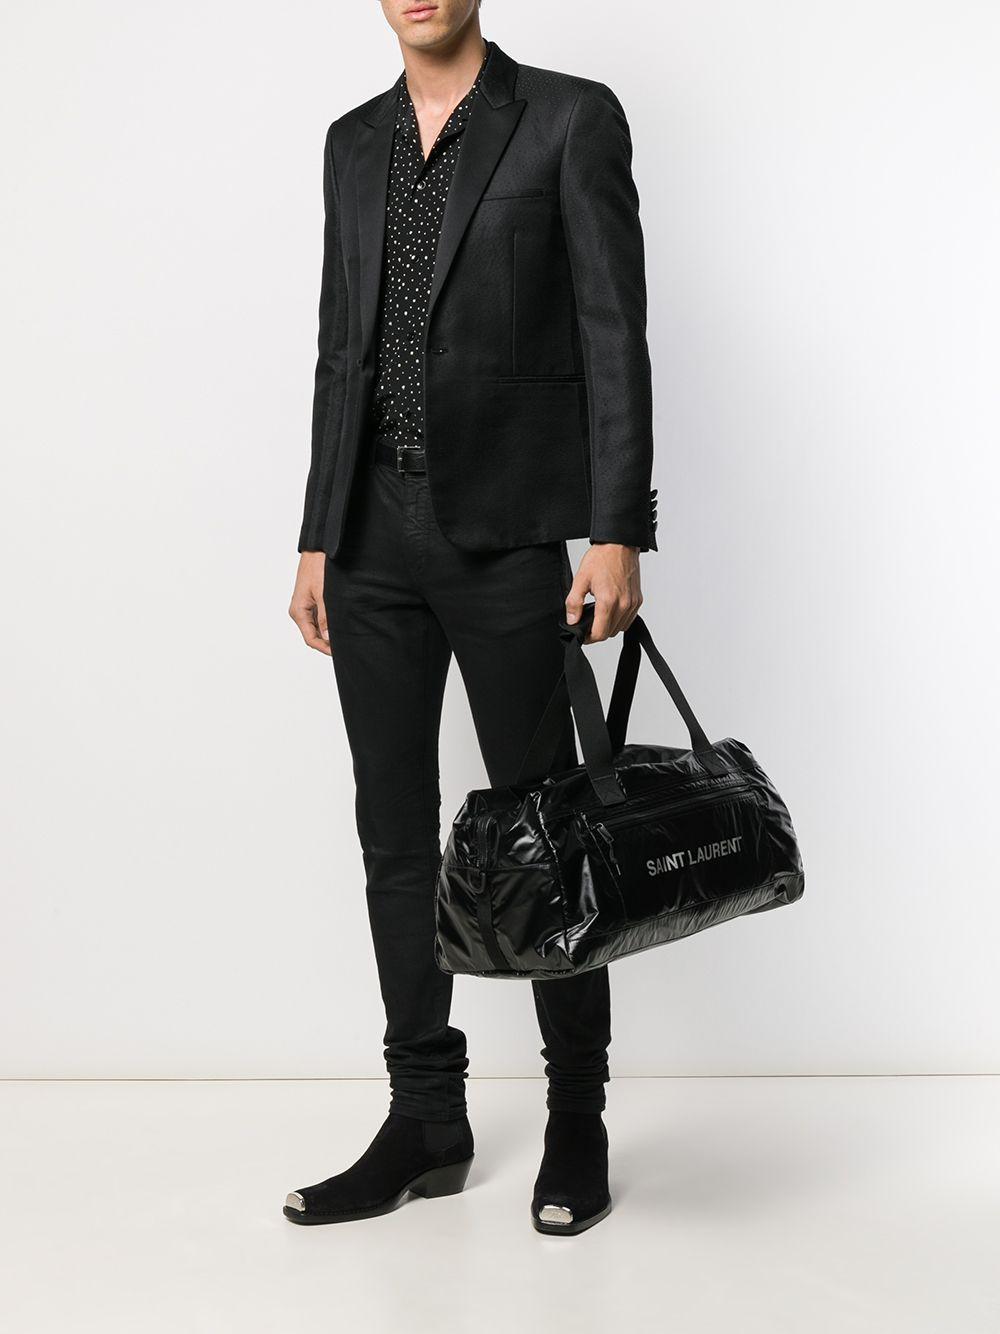 Saint Laurent Synthetic Nuxx Duffle Bag in Black for Men - Save 25 